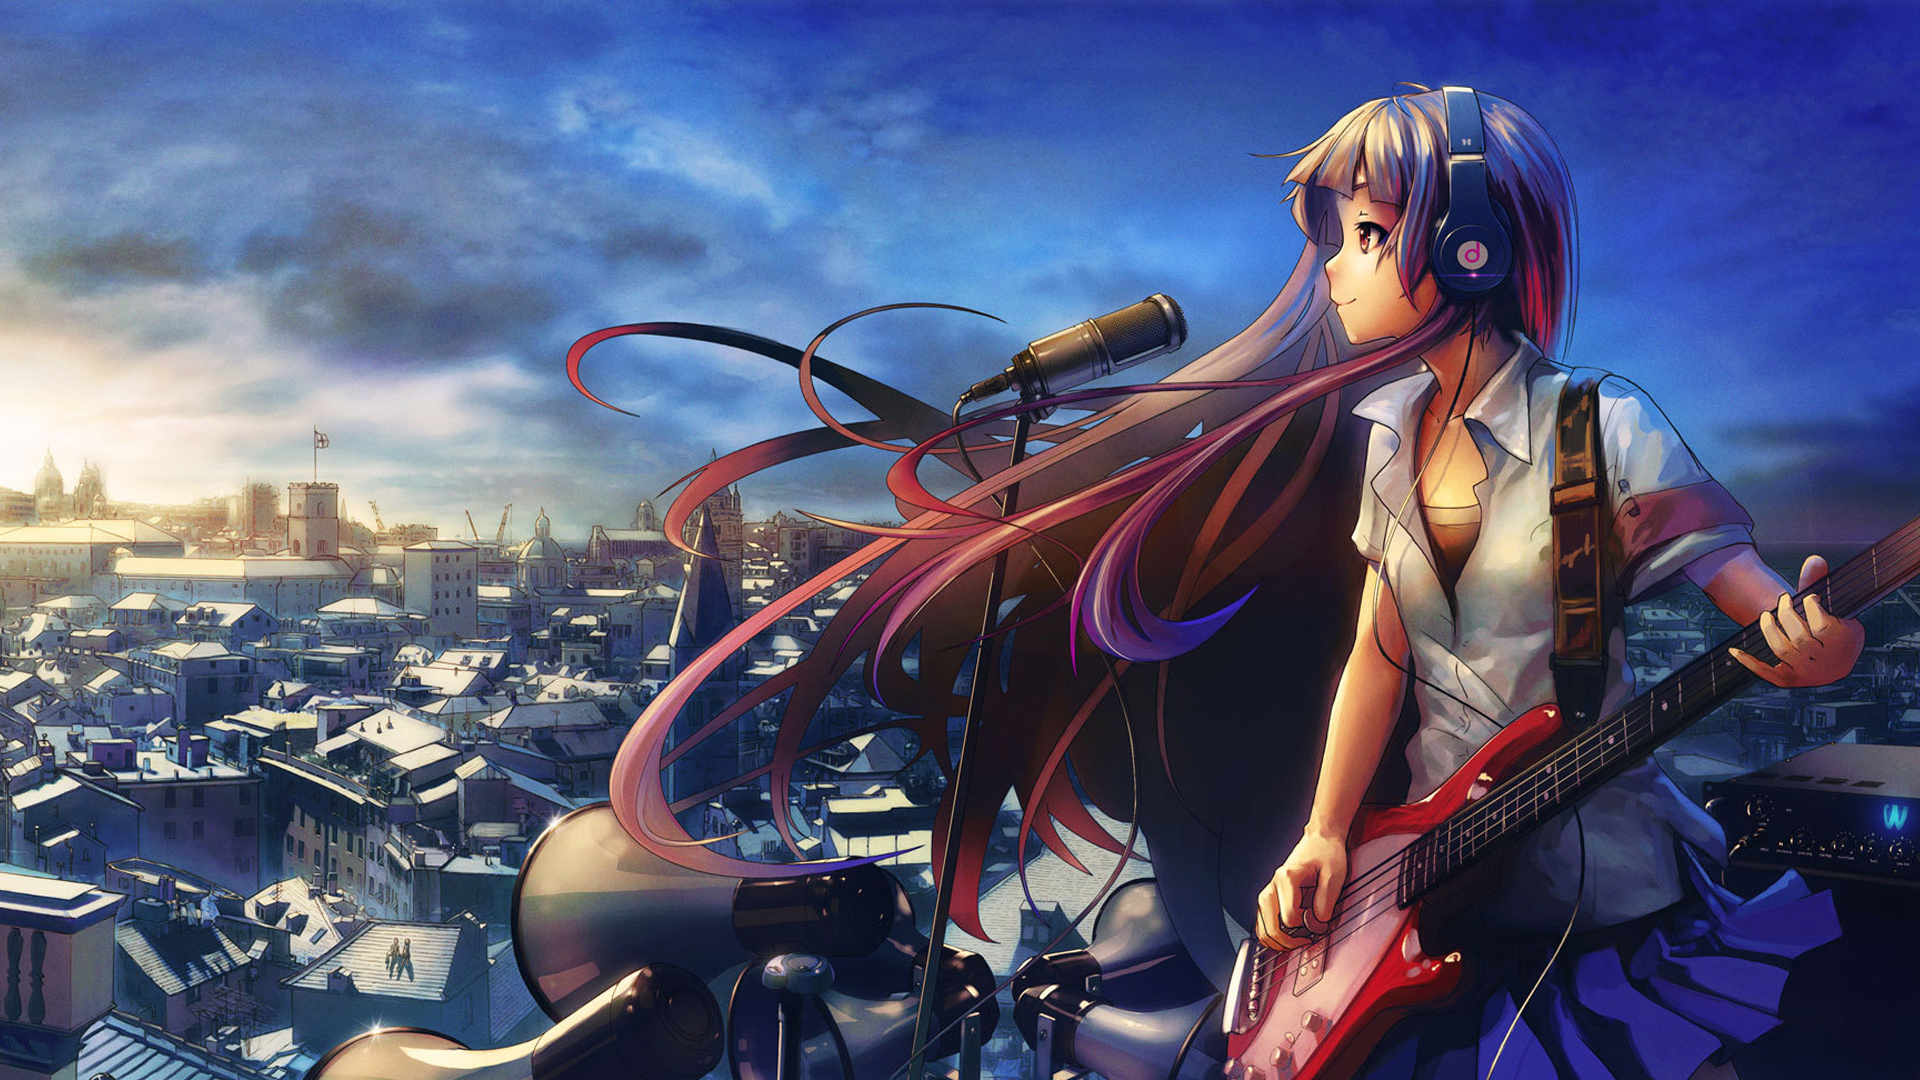 Music Guitar Anime Girl Hd Wallpapers - Hot Anime Girl Background -  1366x768 Wallpaper 